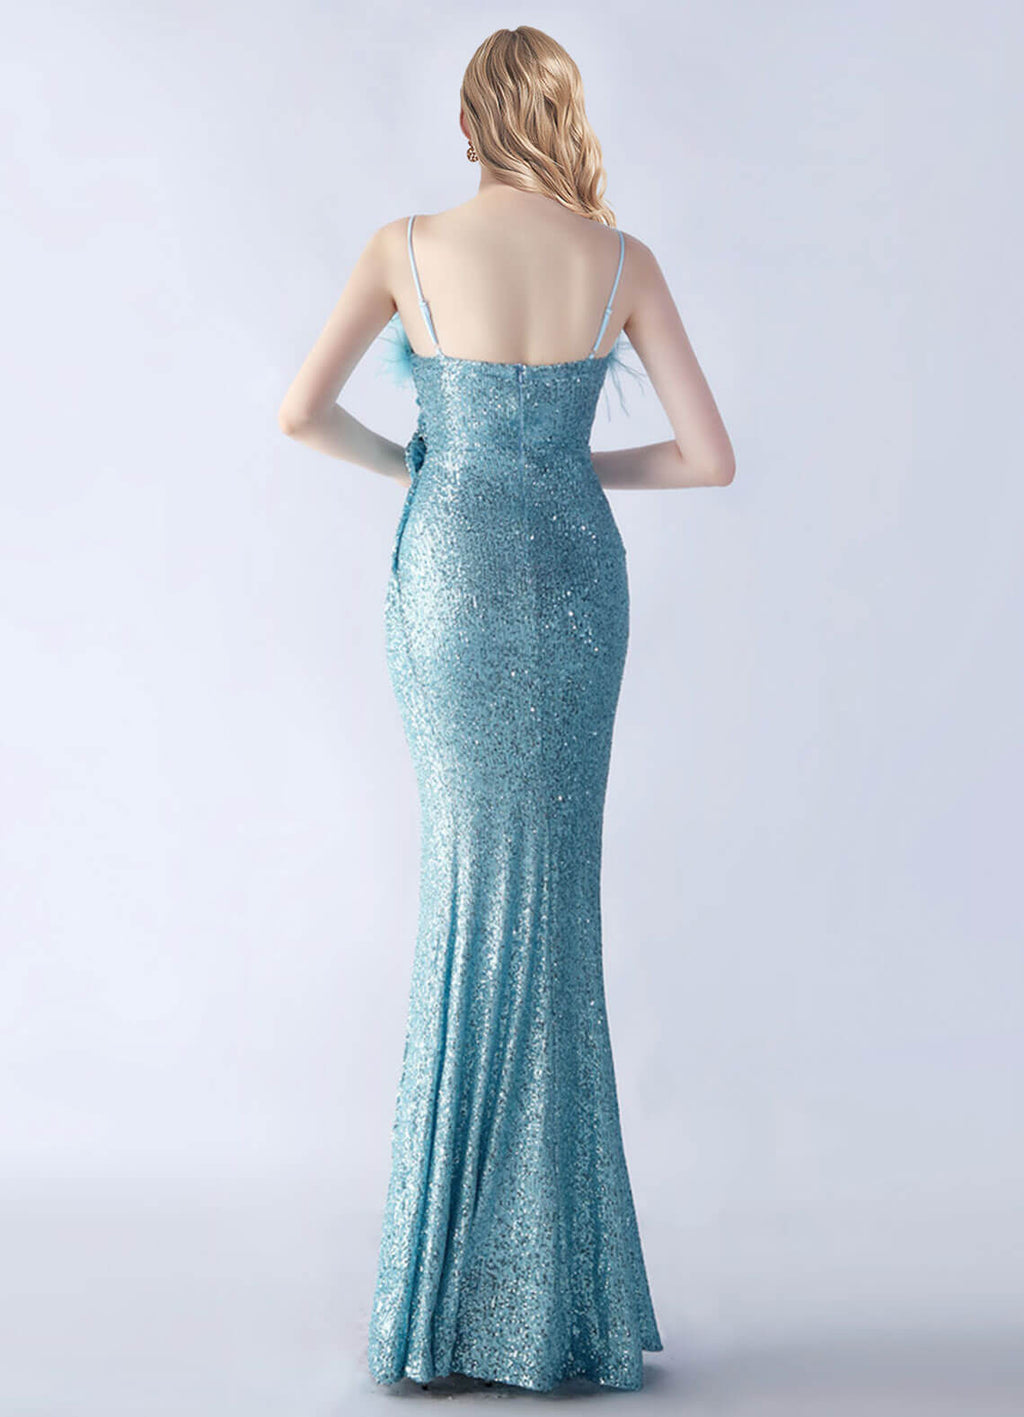 NZ Bridal Cornflower Blue Spaghetti Slit Sequin Mermaid Prom Dress 31365 Sadie a